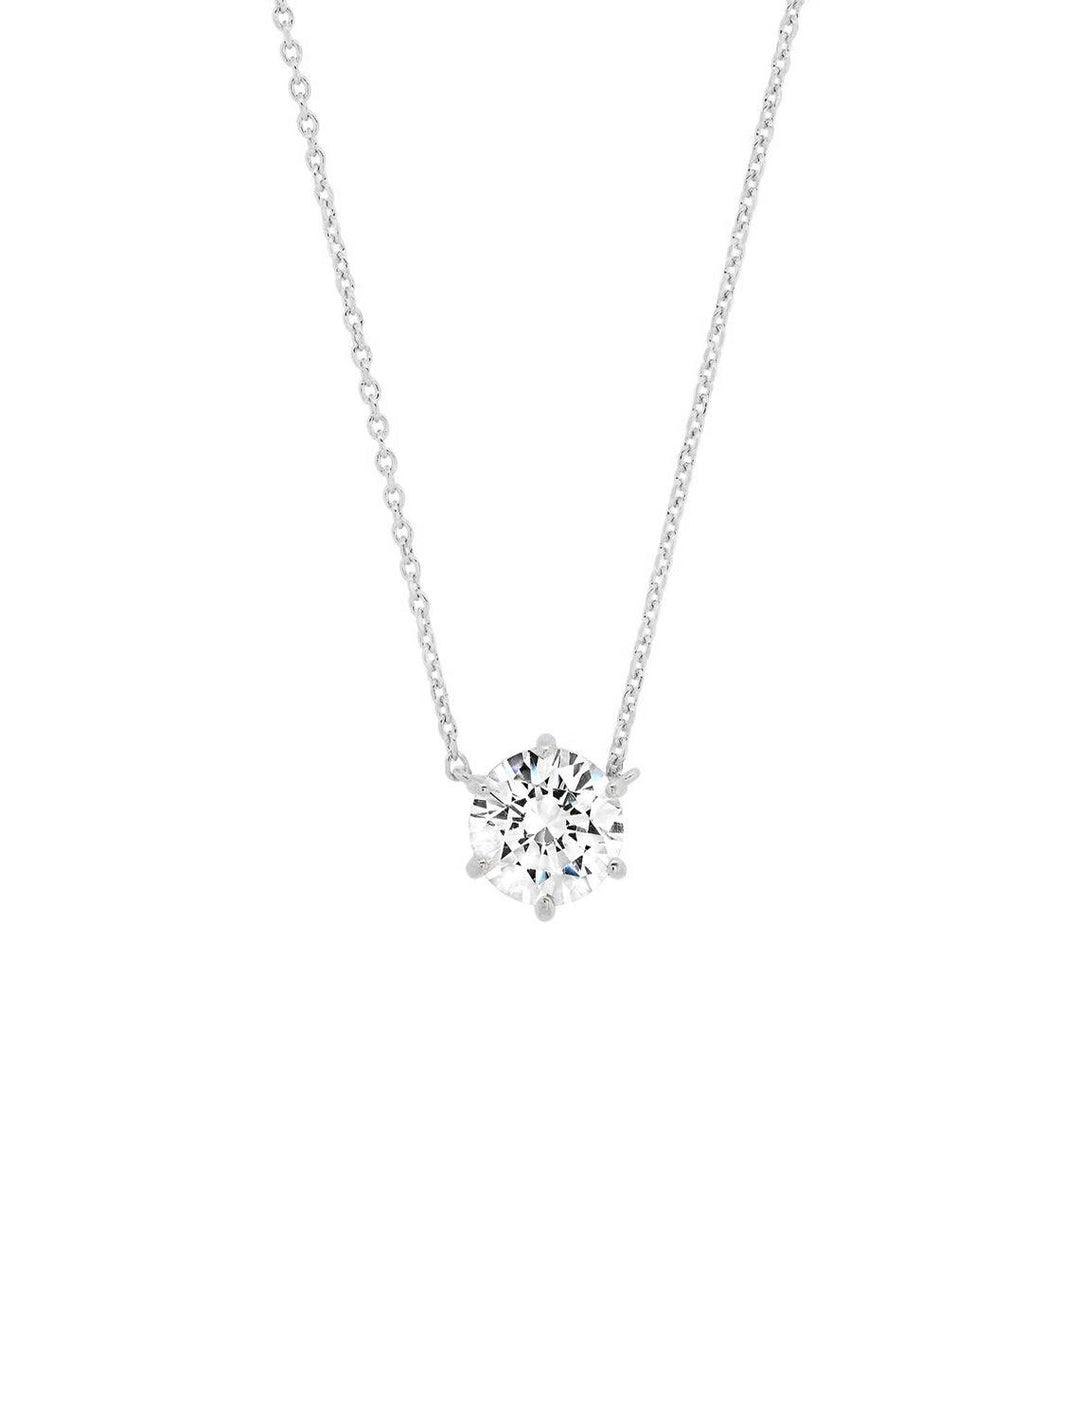 medium cz pendant necklace in silver